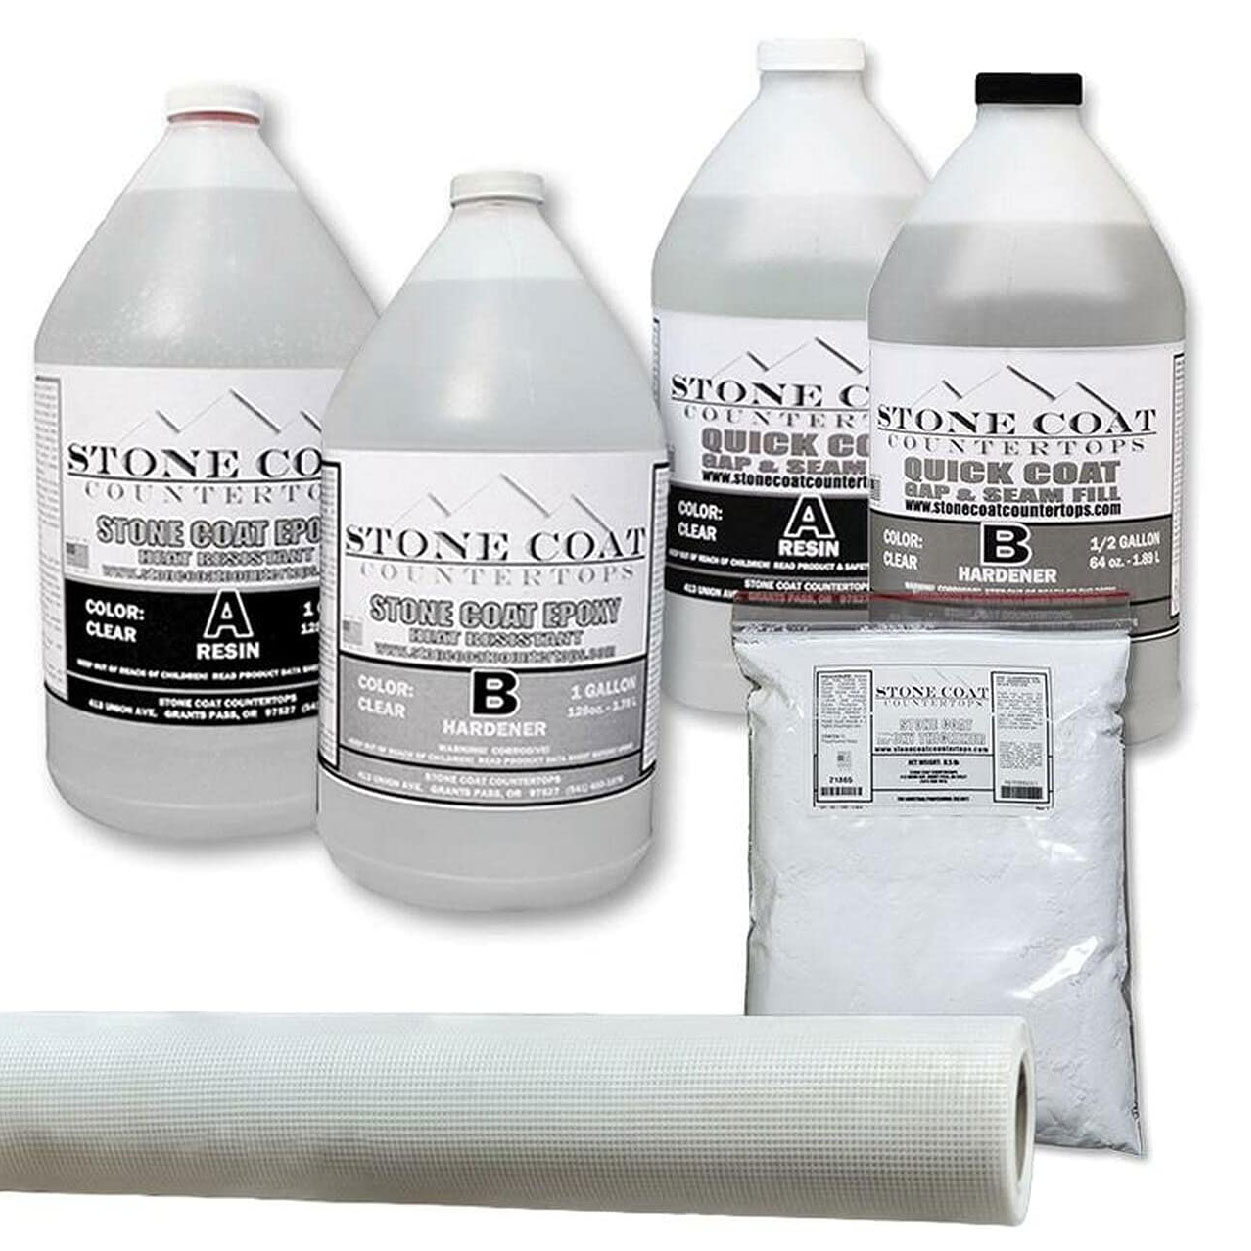  Stone Coat Countertops 1/2 Gallon Epoxy Resin KitDIY Countertop  Epoxy Kit For Kitchens